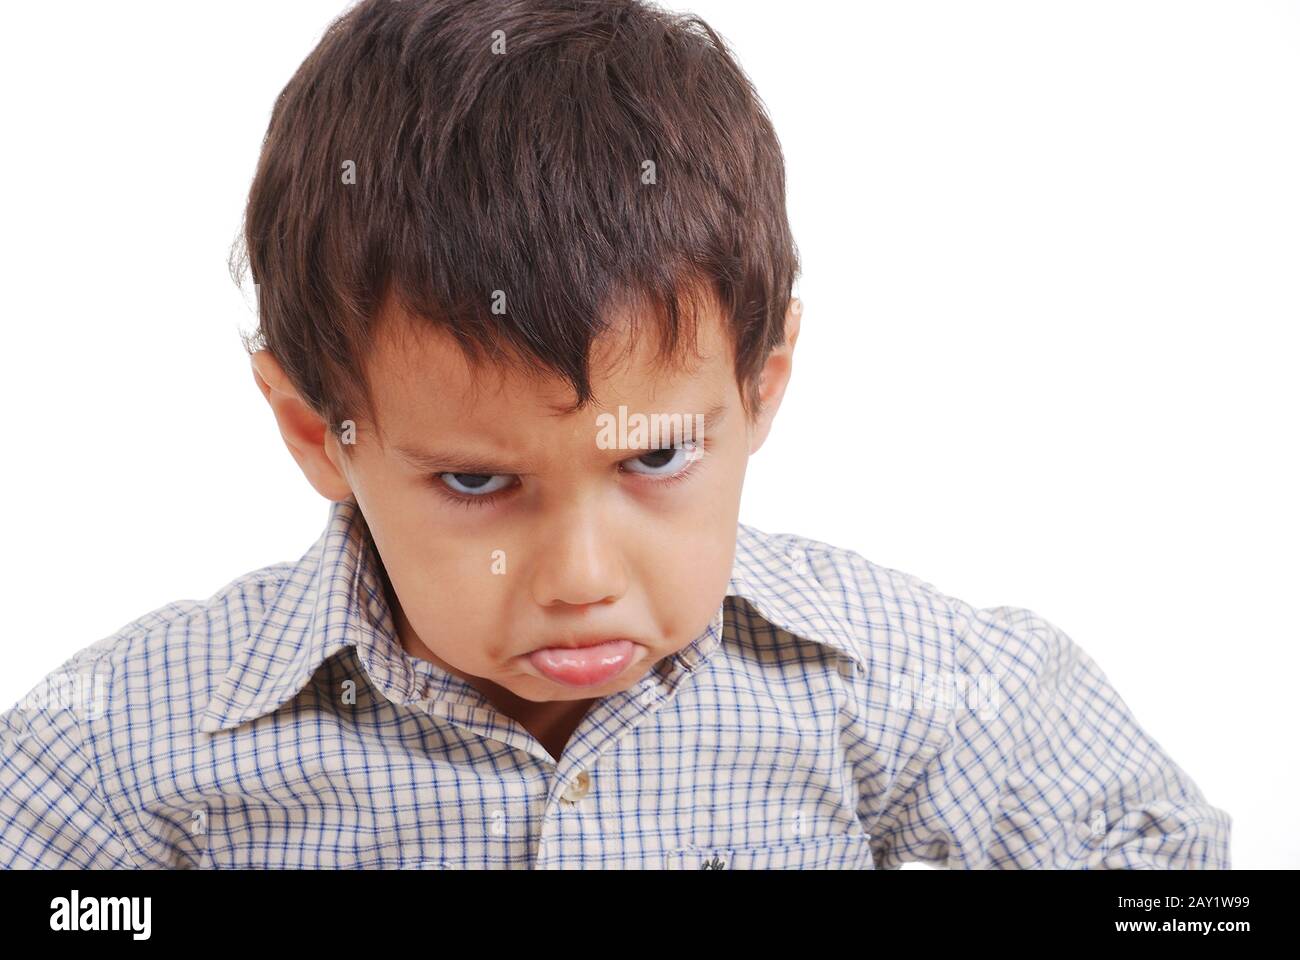 Very very angry kid Stock Photo